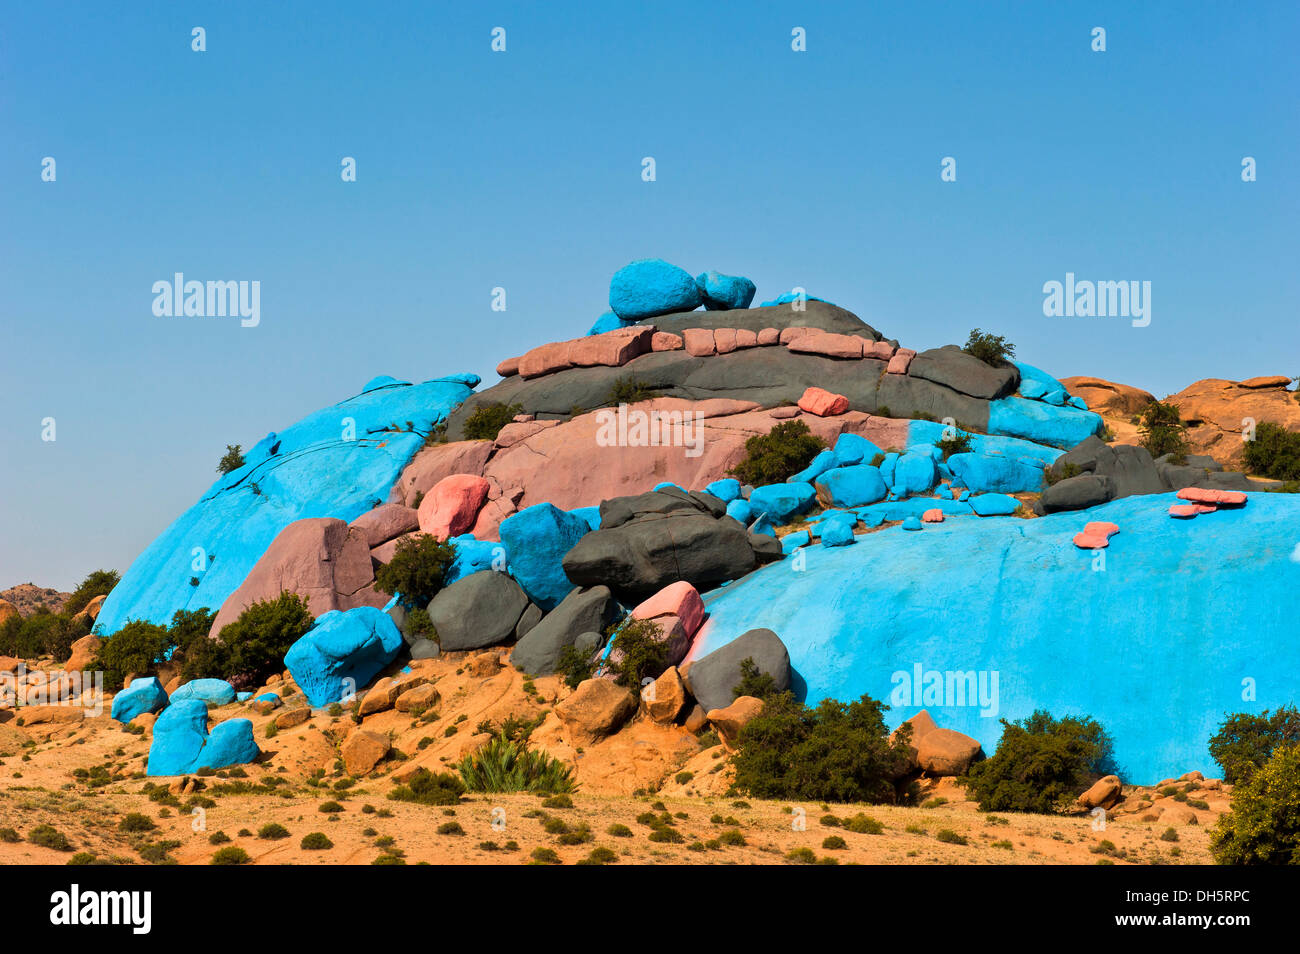 Fraude Recitar Bocadillo Pinturas de rocas fotografías e imágenes de alta resolución - Alamy